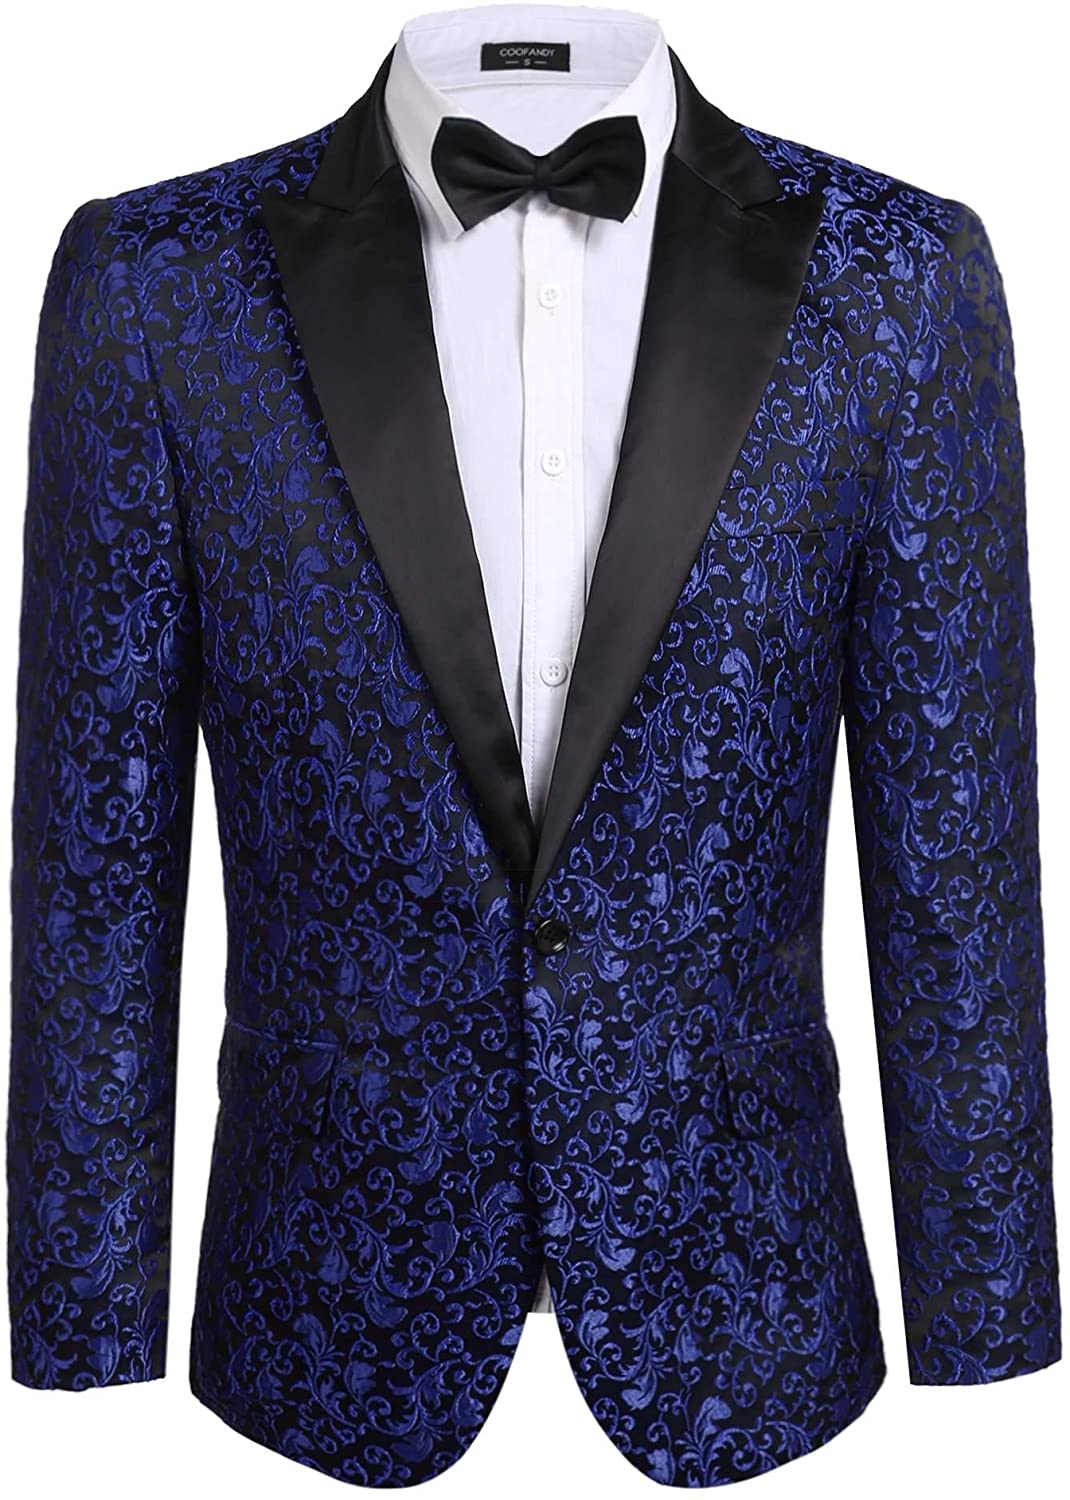 Coofandy Men Floral Blazer Suit Jacket Dinner Party Prom Wedding Stylish Tuxedo Ebay